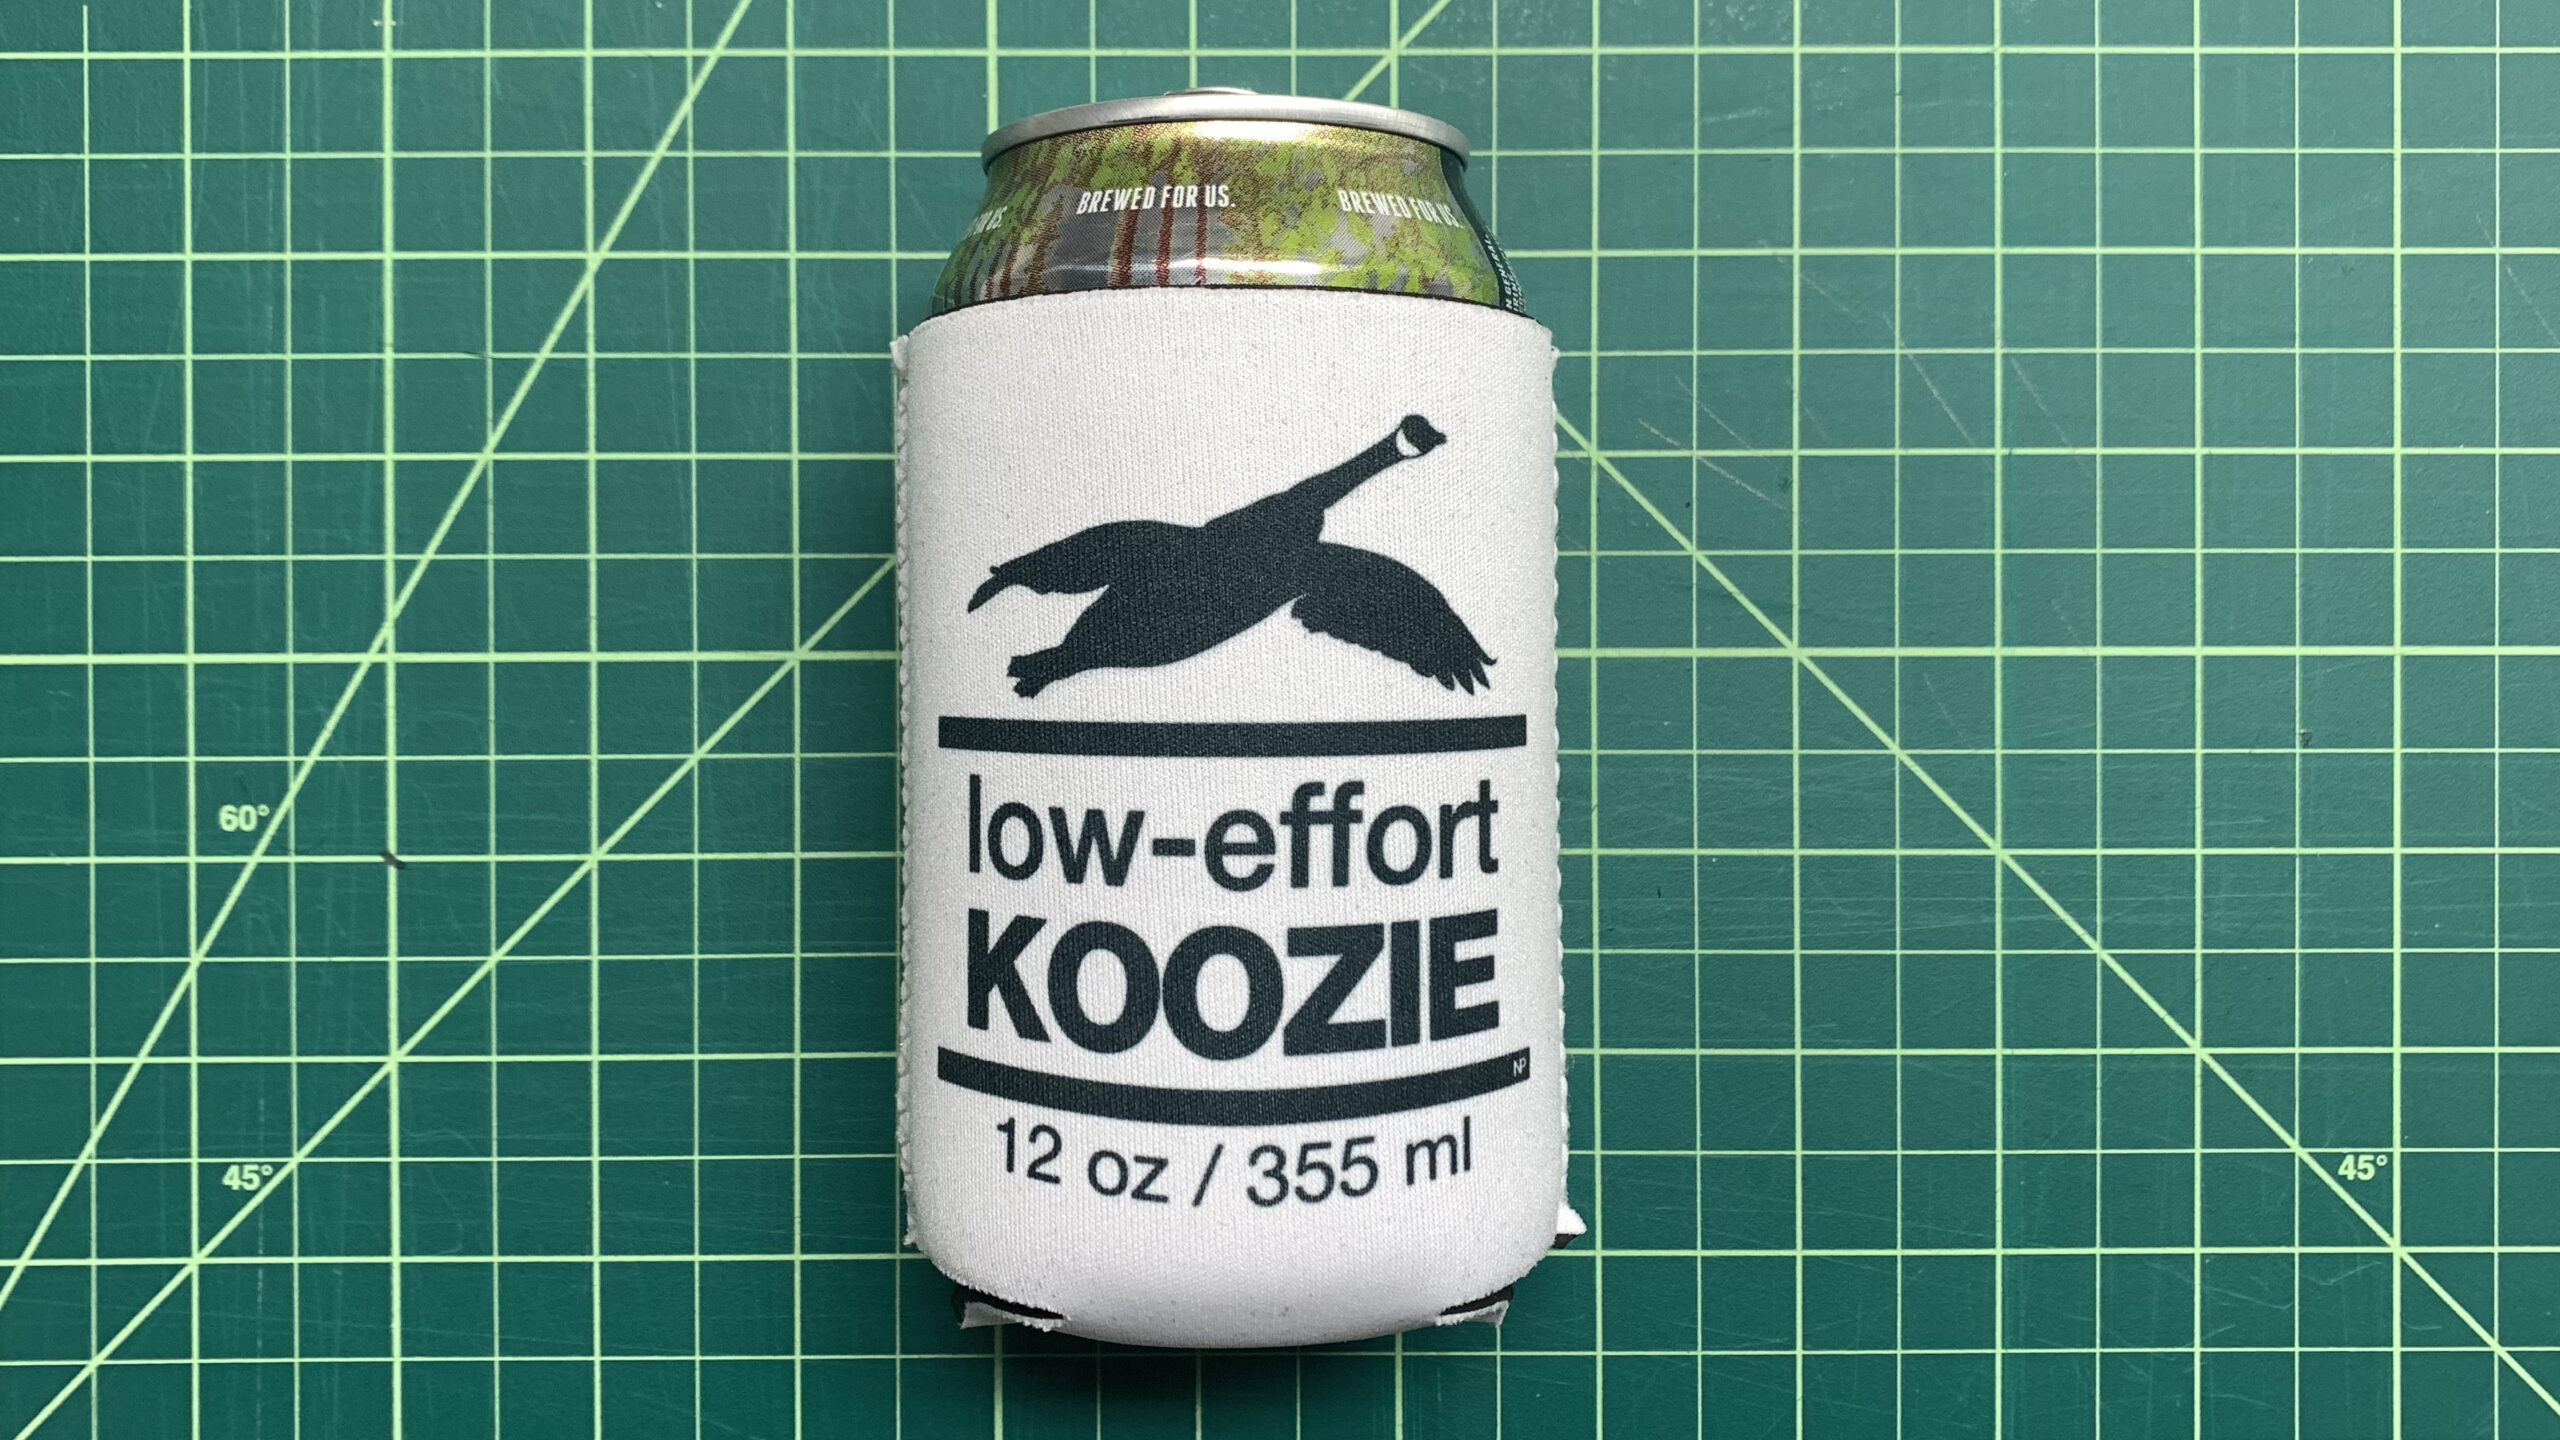 12oz Low effort koozie - on can